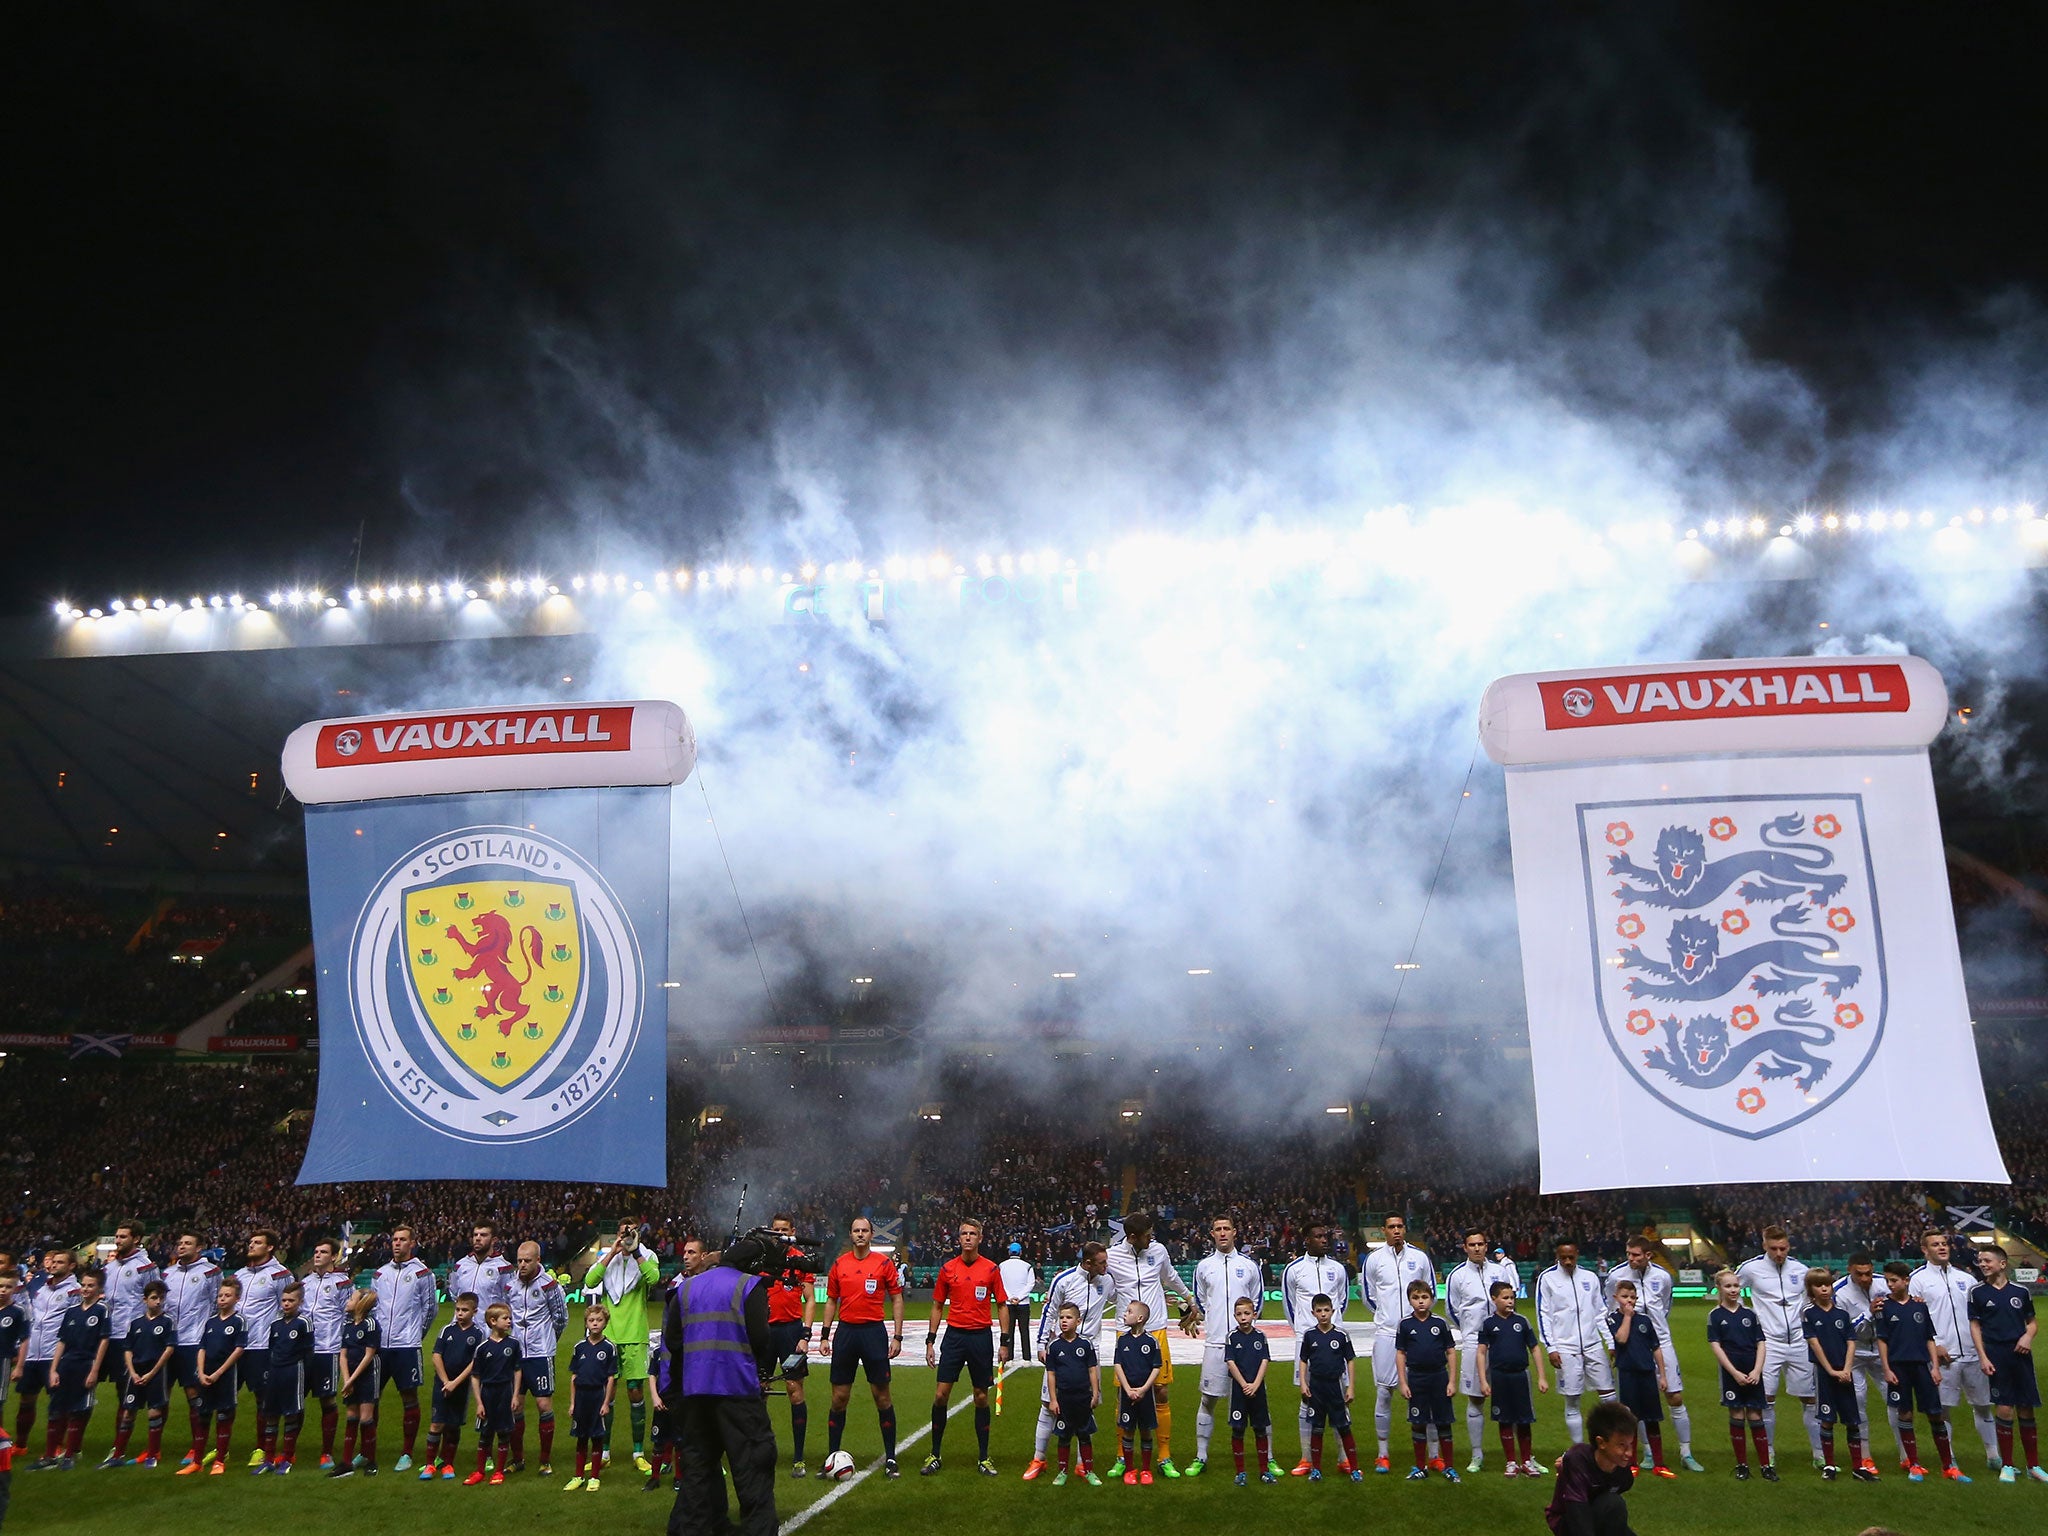 The teams emerge before Scotland vs England